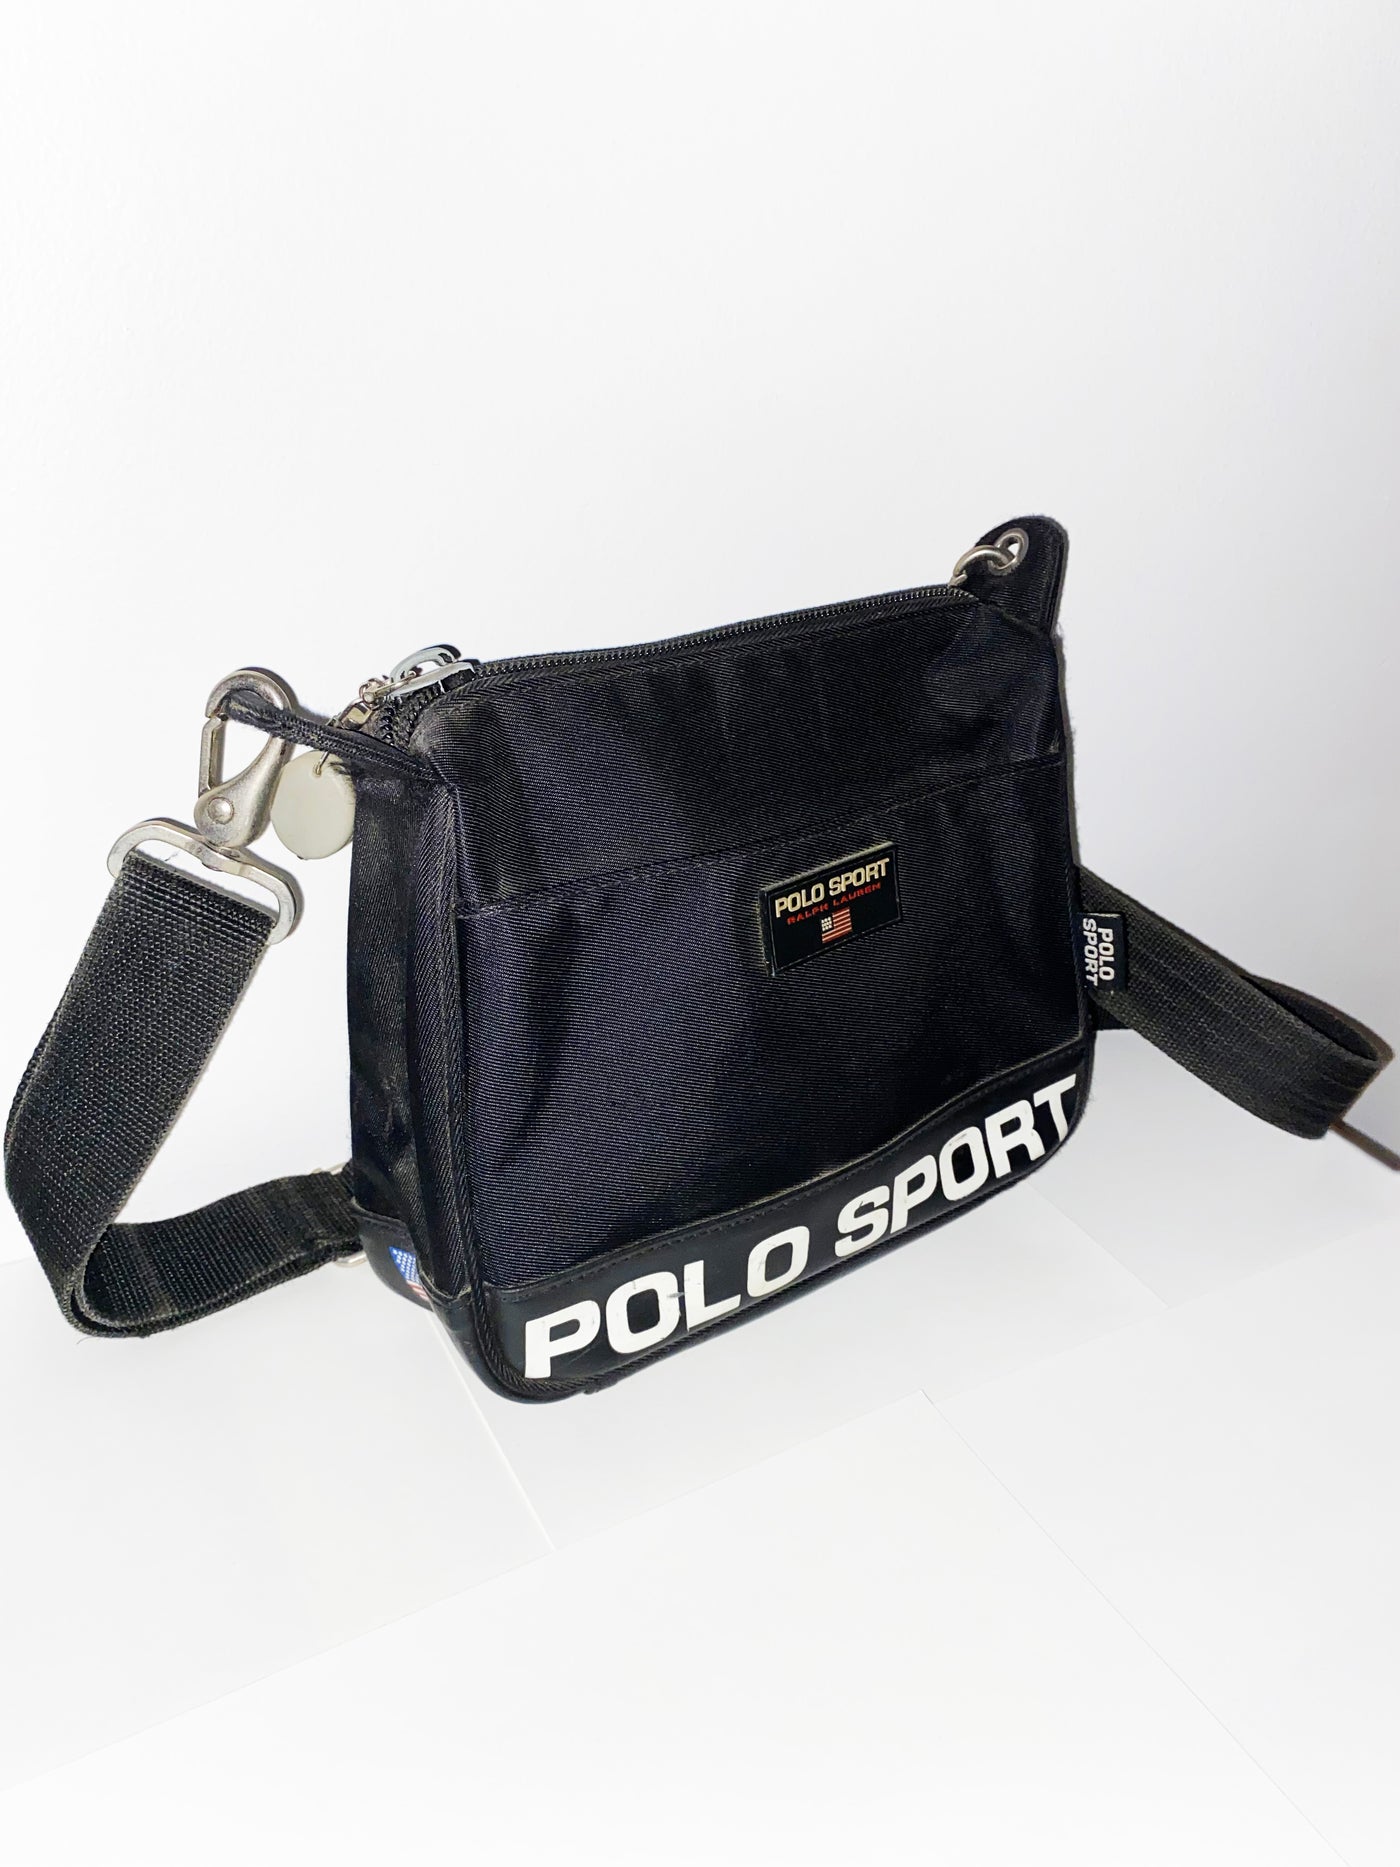 Vintage POLO SPORT Ralph Lauren Gray Black Shoulders Handbag 